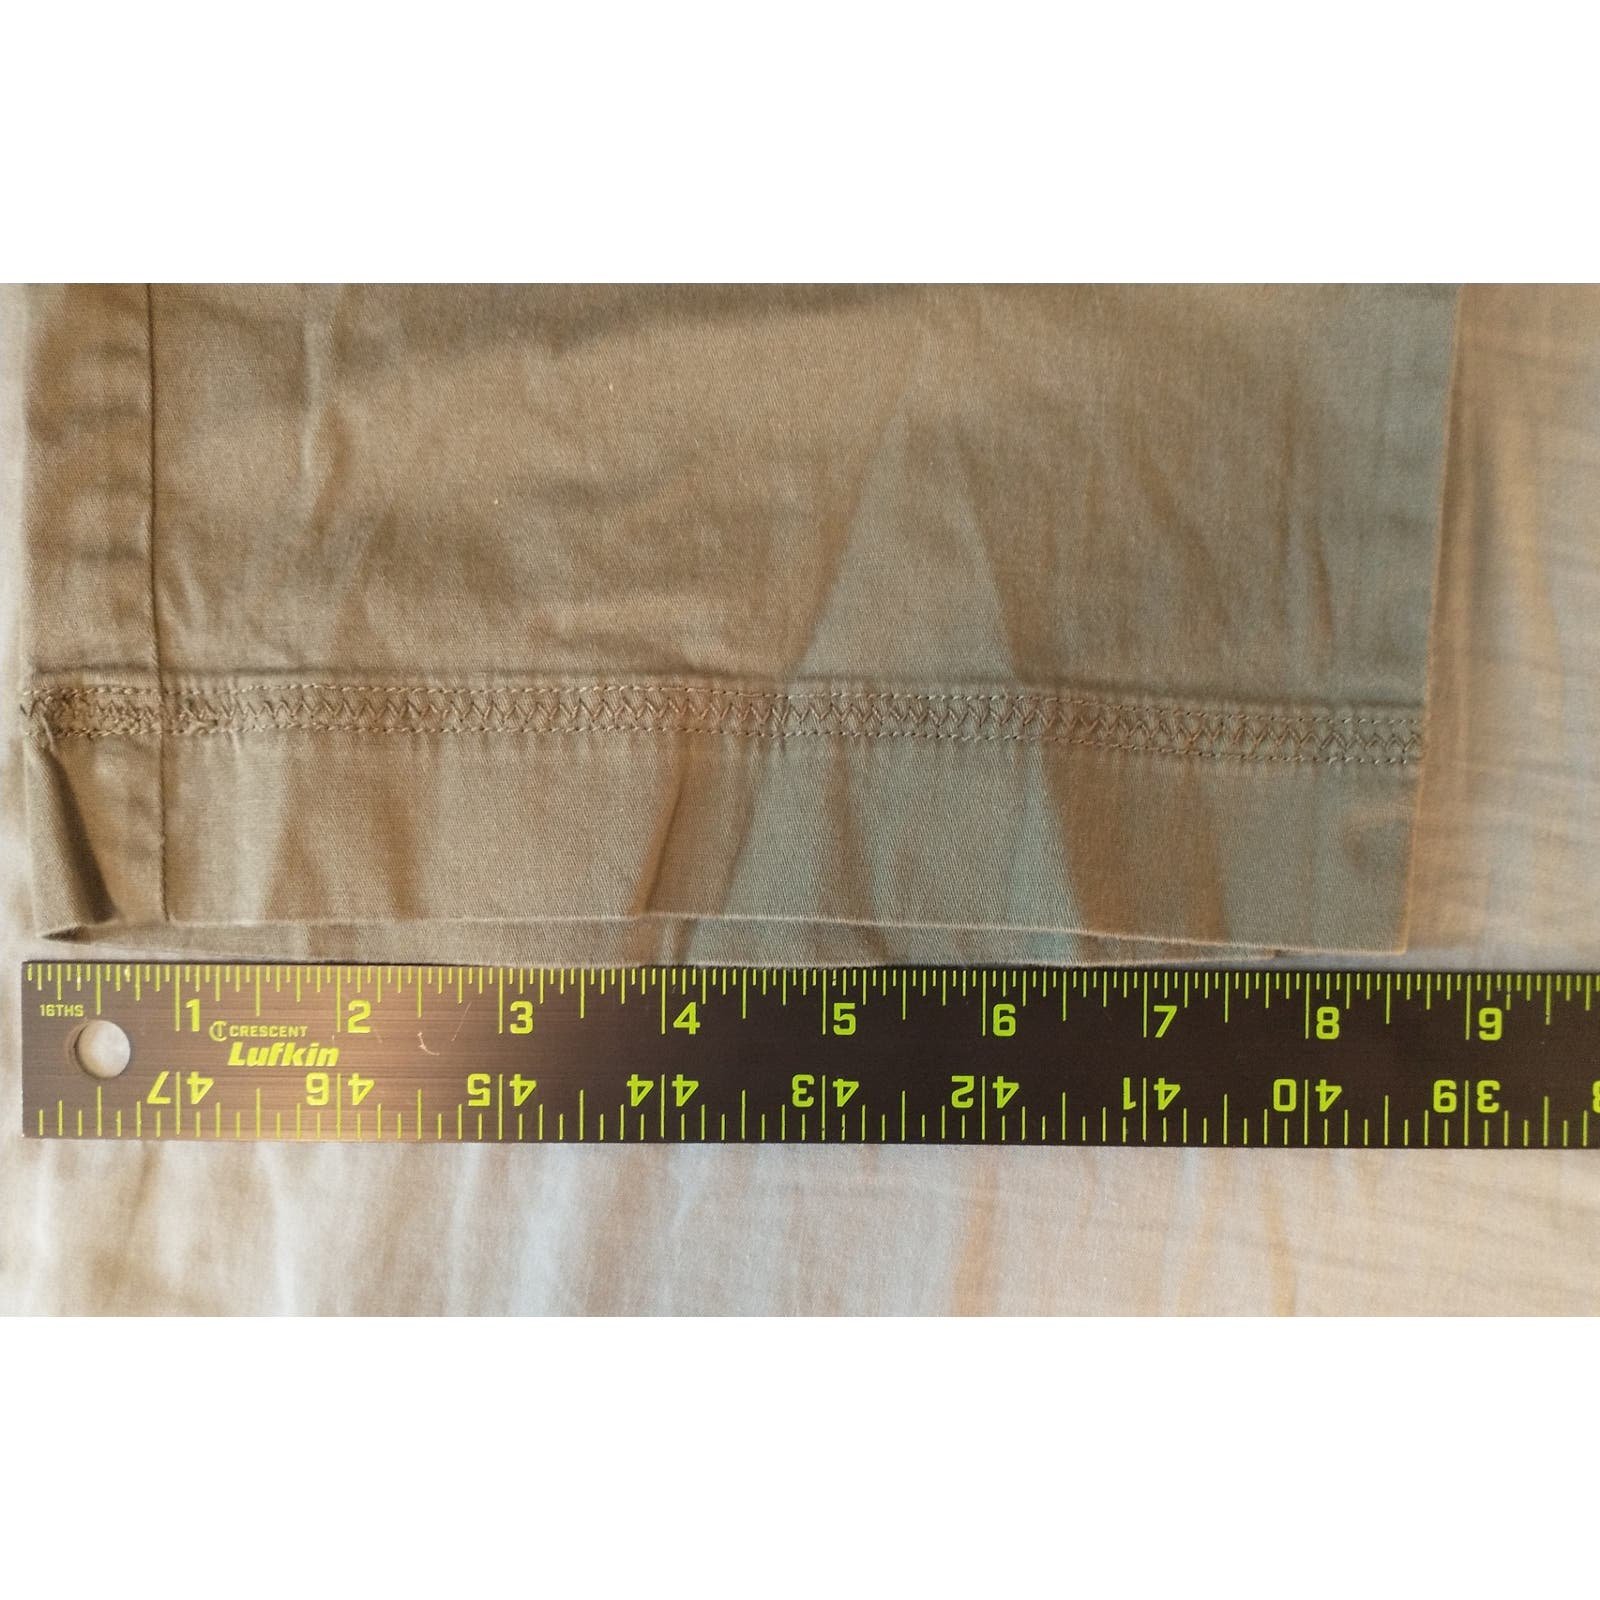 Comfortable Kenar Flat Front Pants. Women´s Size 2. Brown. ixa3EqEqn Low Price